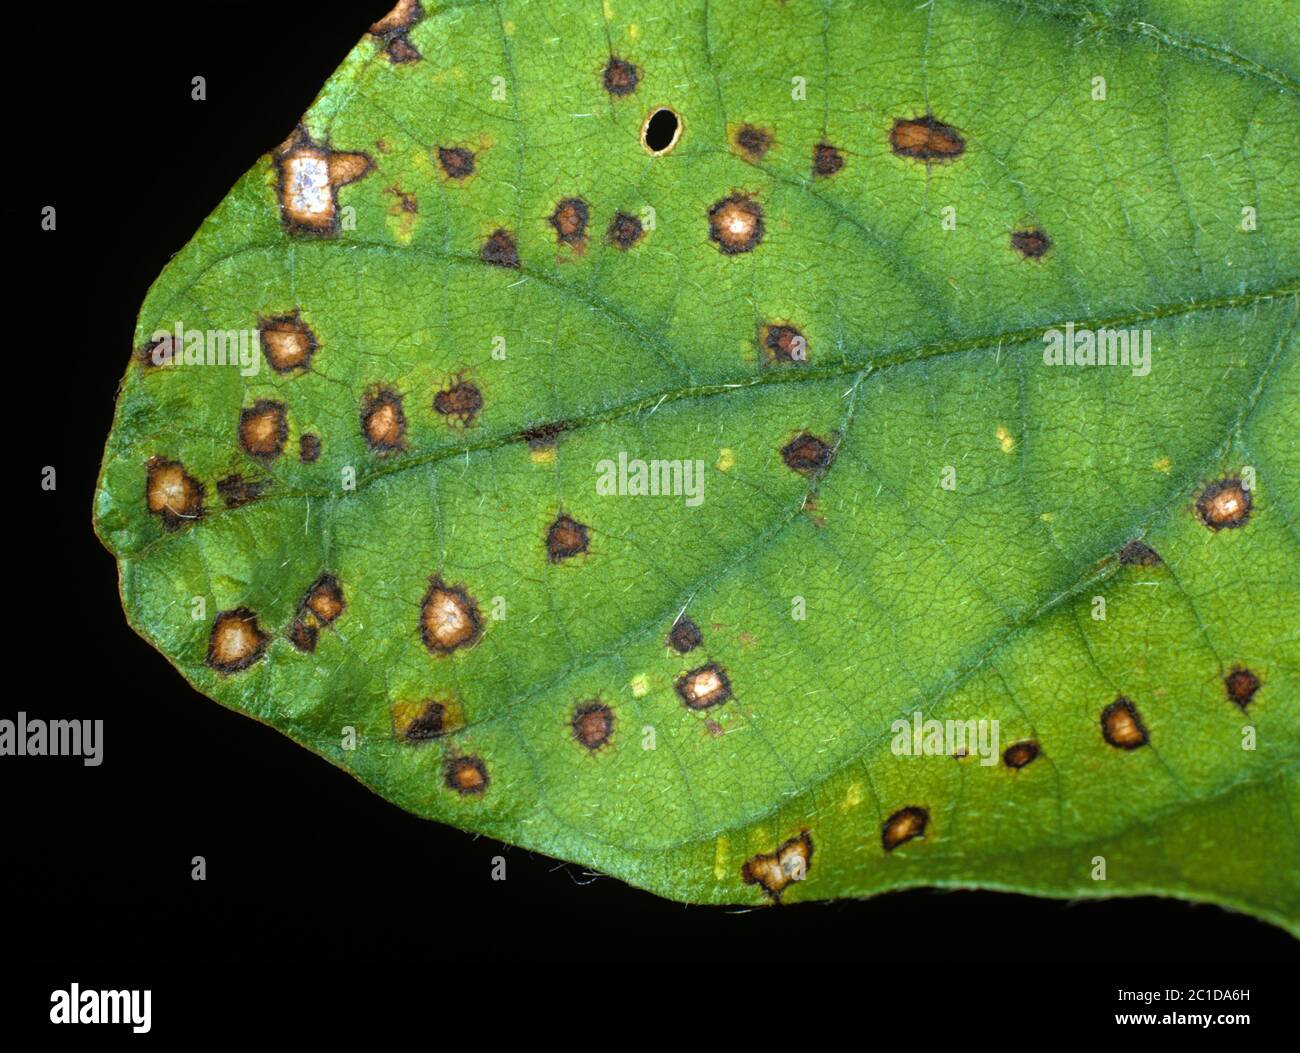 Frogeye leaf spot (Cercospora sojina) discreet circular lesions on soybean leaf, Florida, USA, May Stock Photo